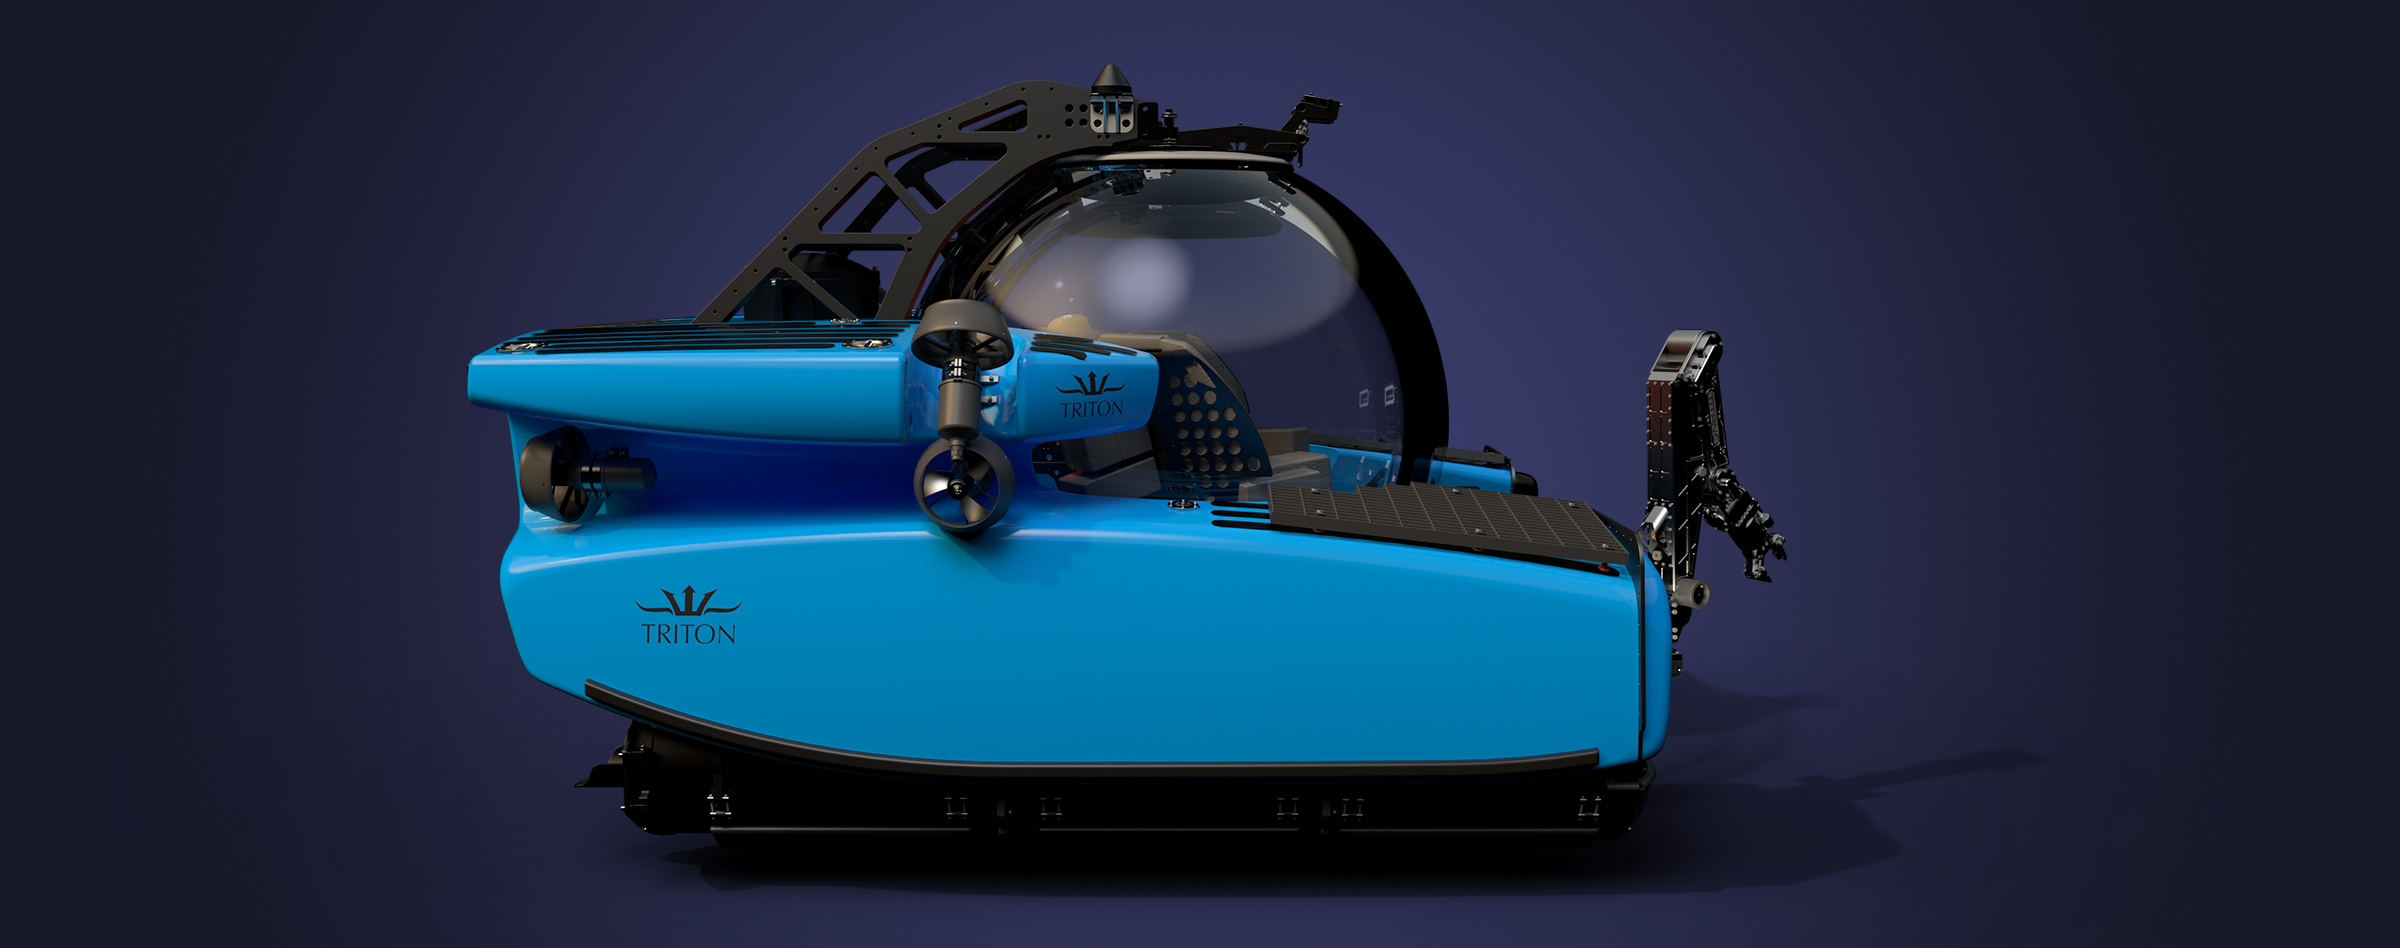 Triton Personal Submarine